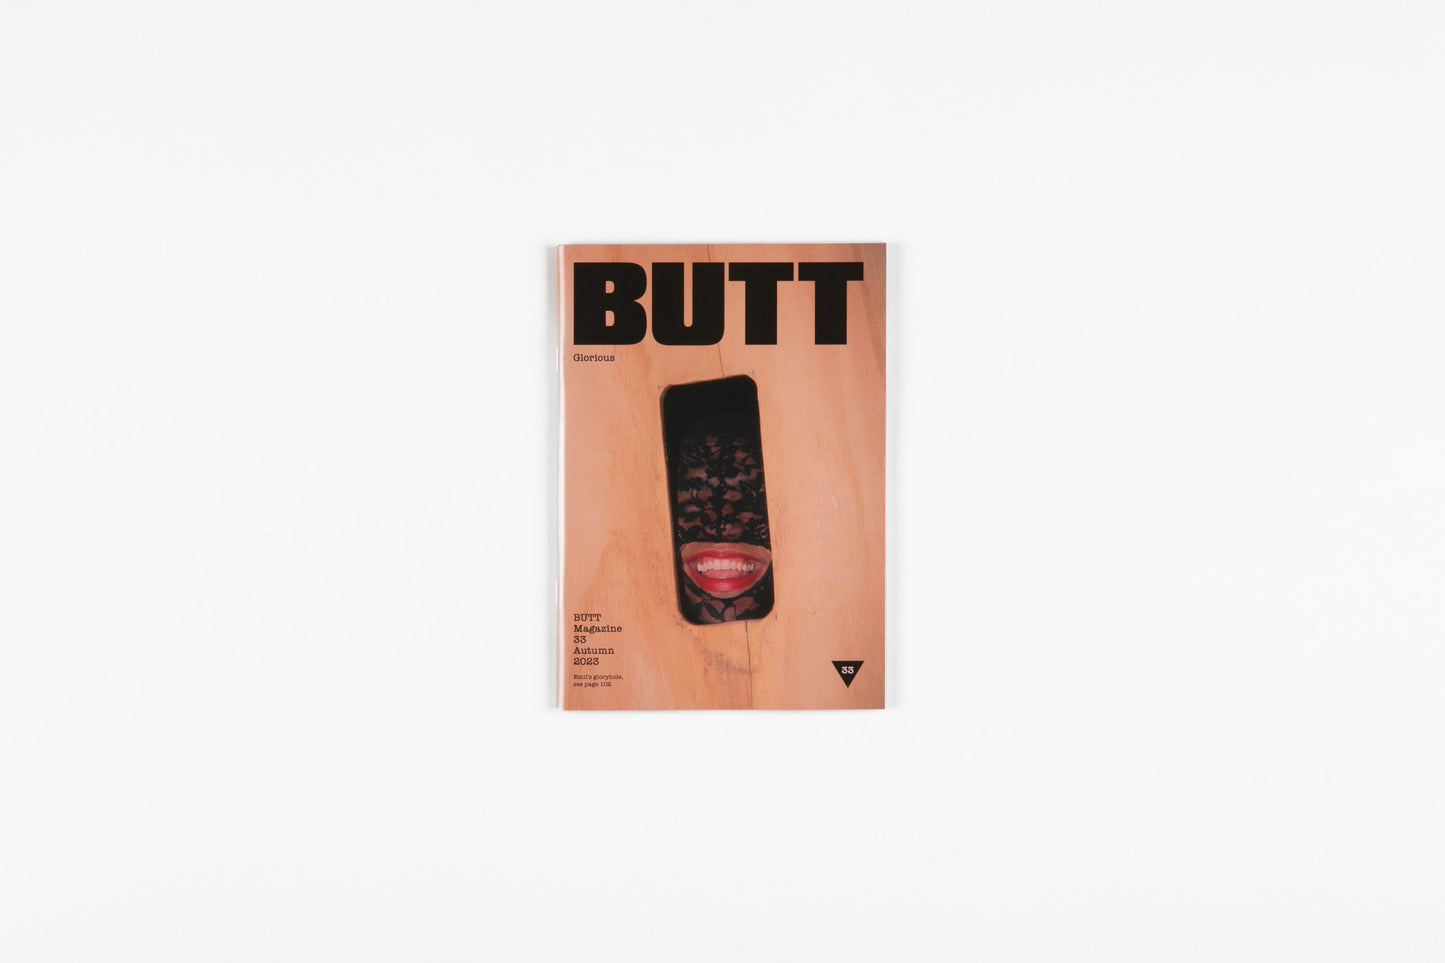 Butt Issue 33